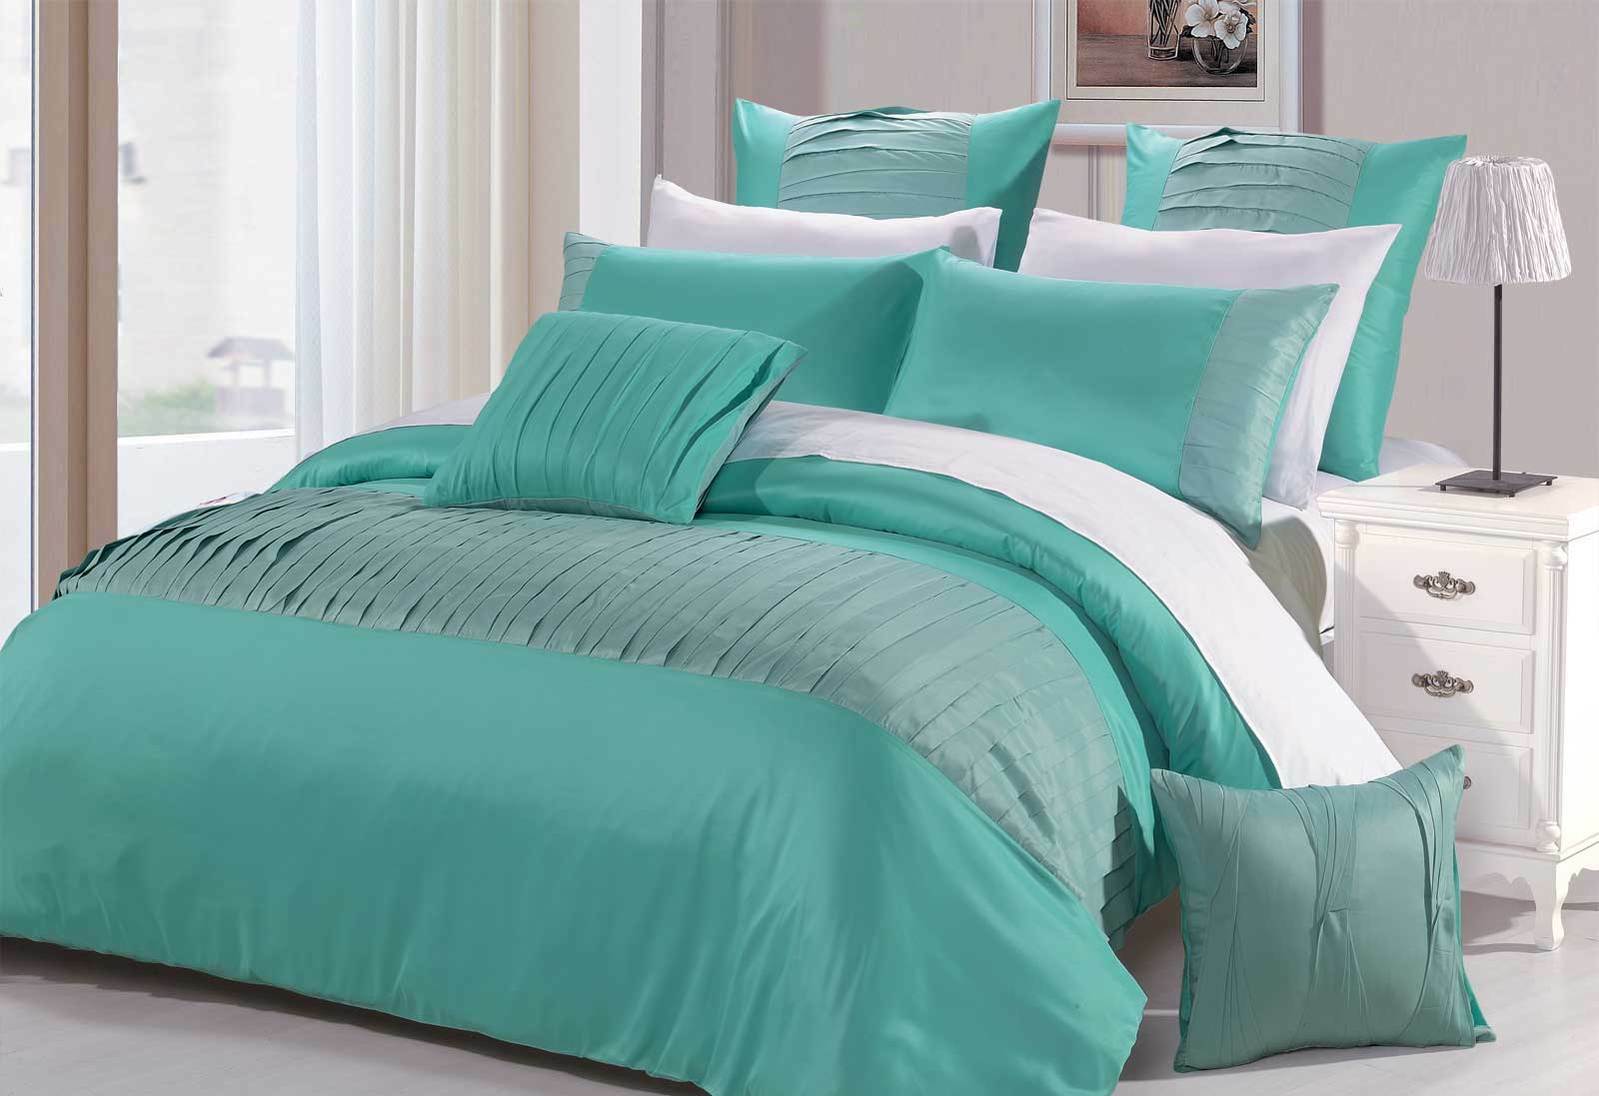 Molise Turquoise Quilt Cover Set | Aqua Summer bedding set